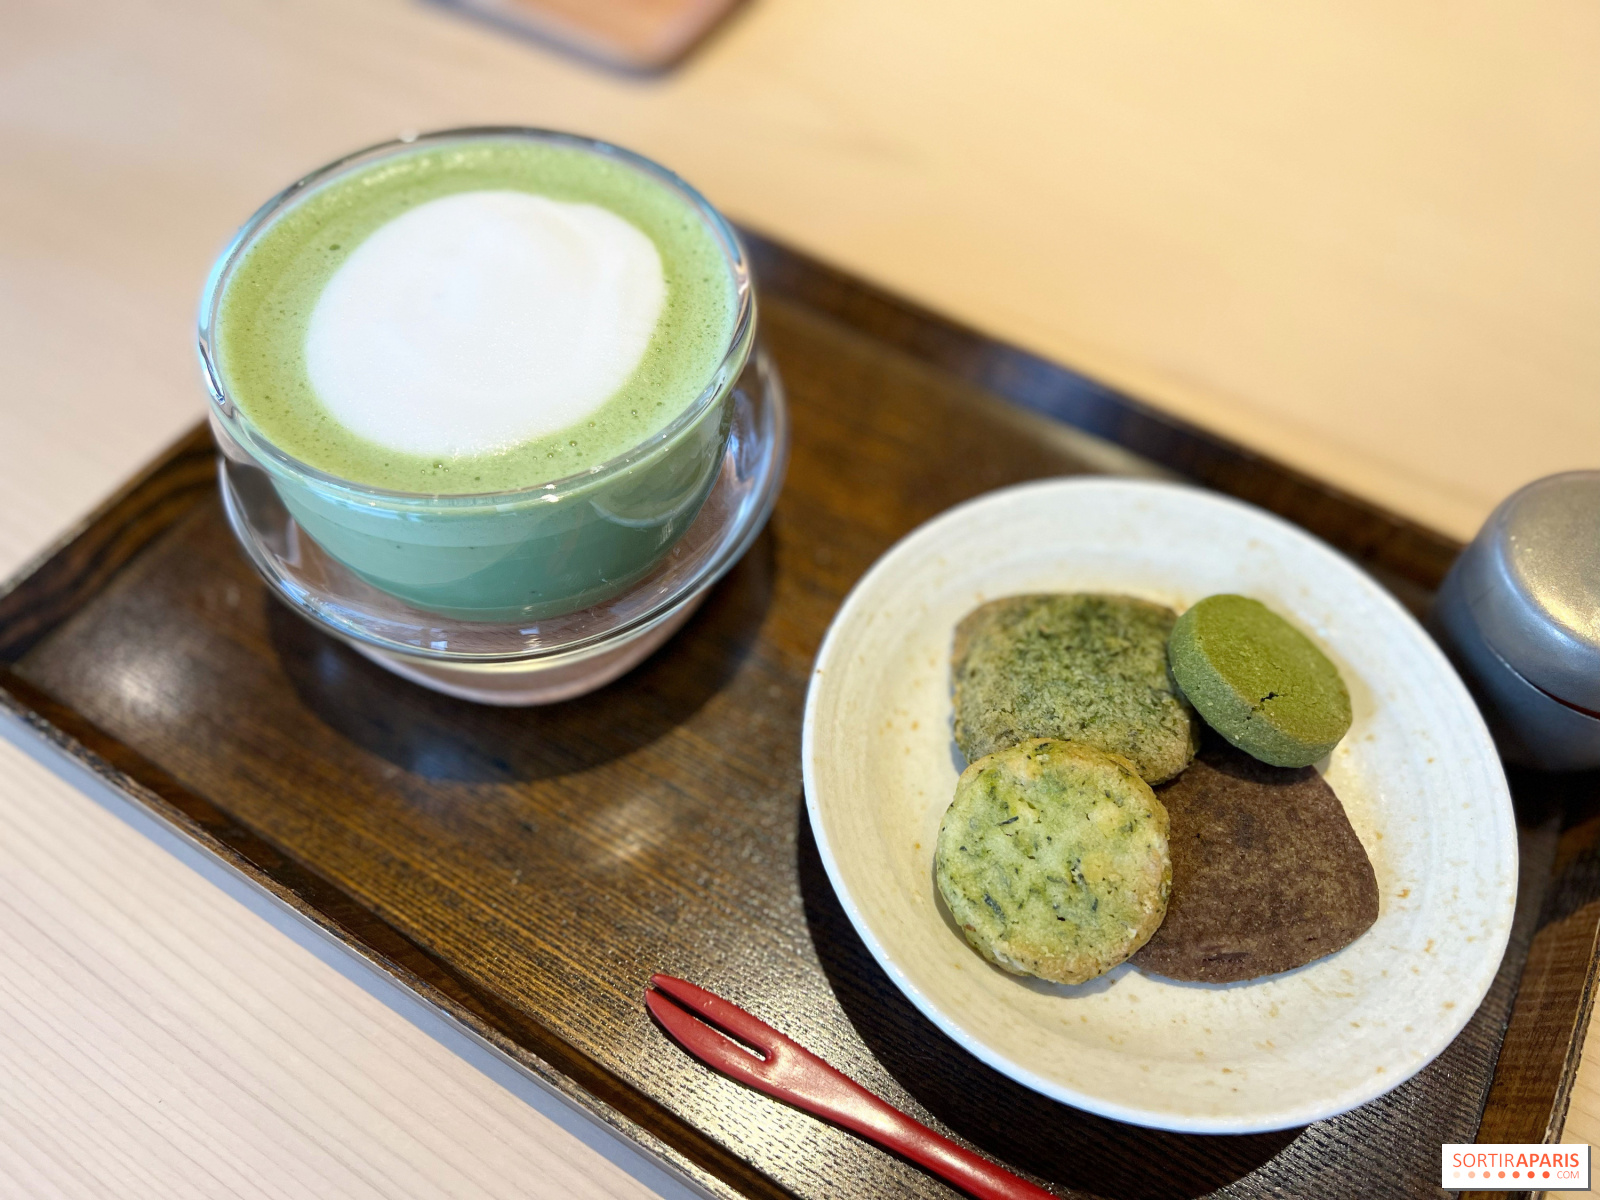 Service à thé Matcha made in Japan